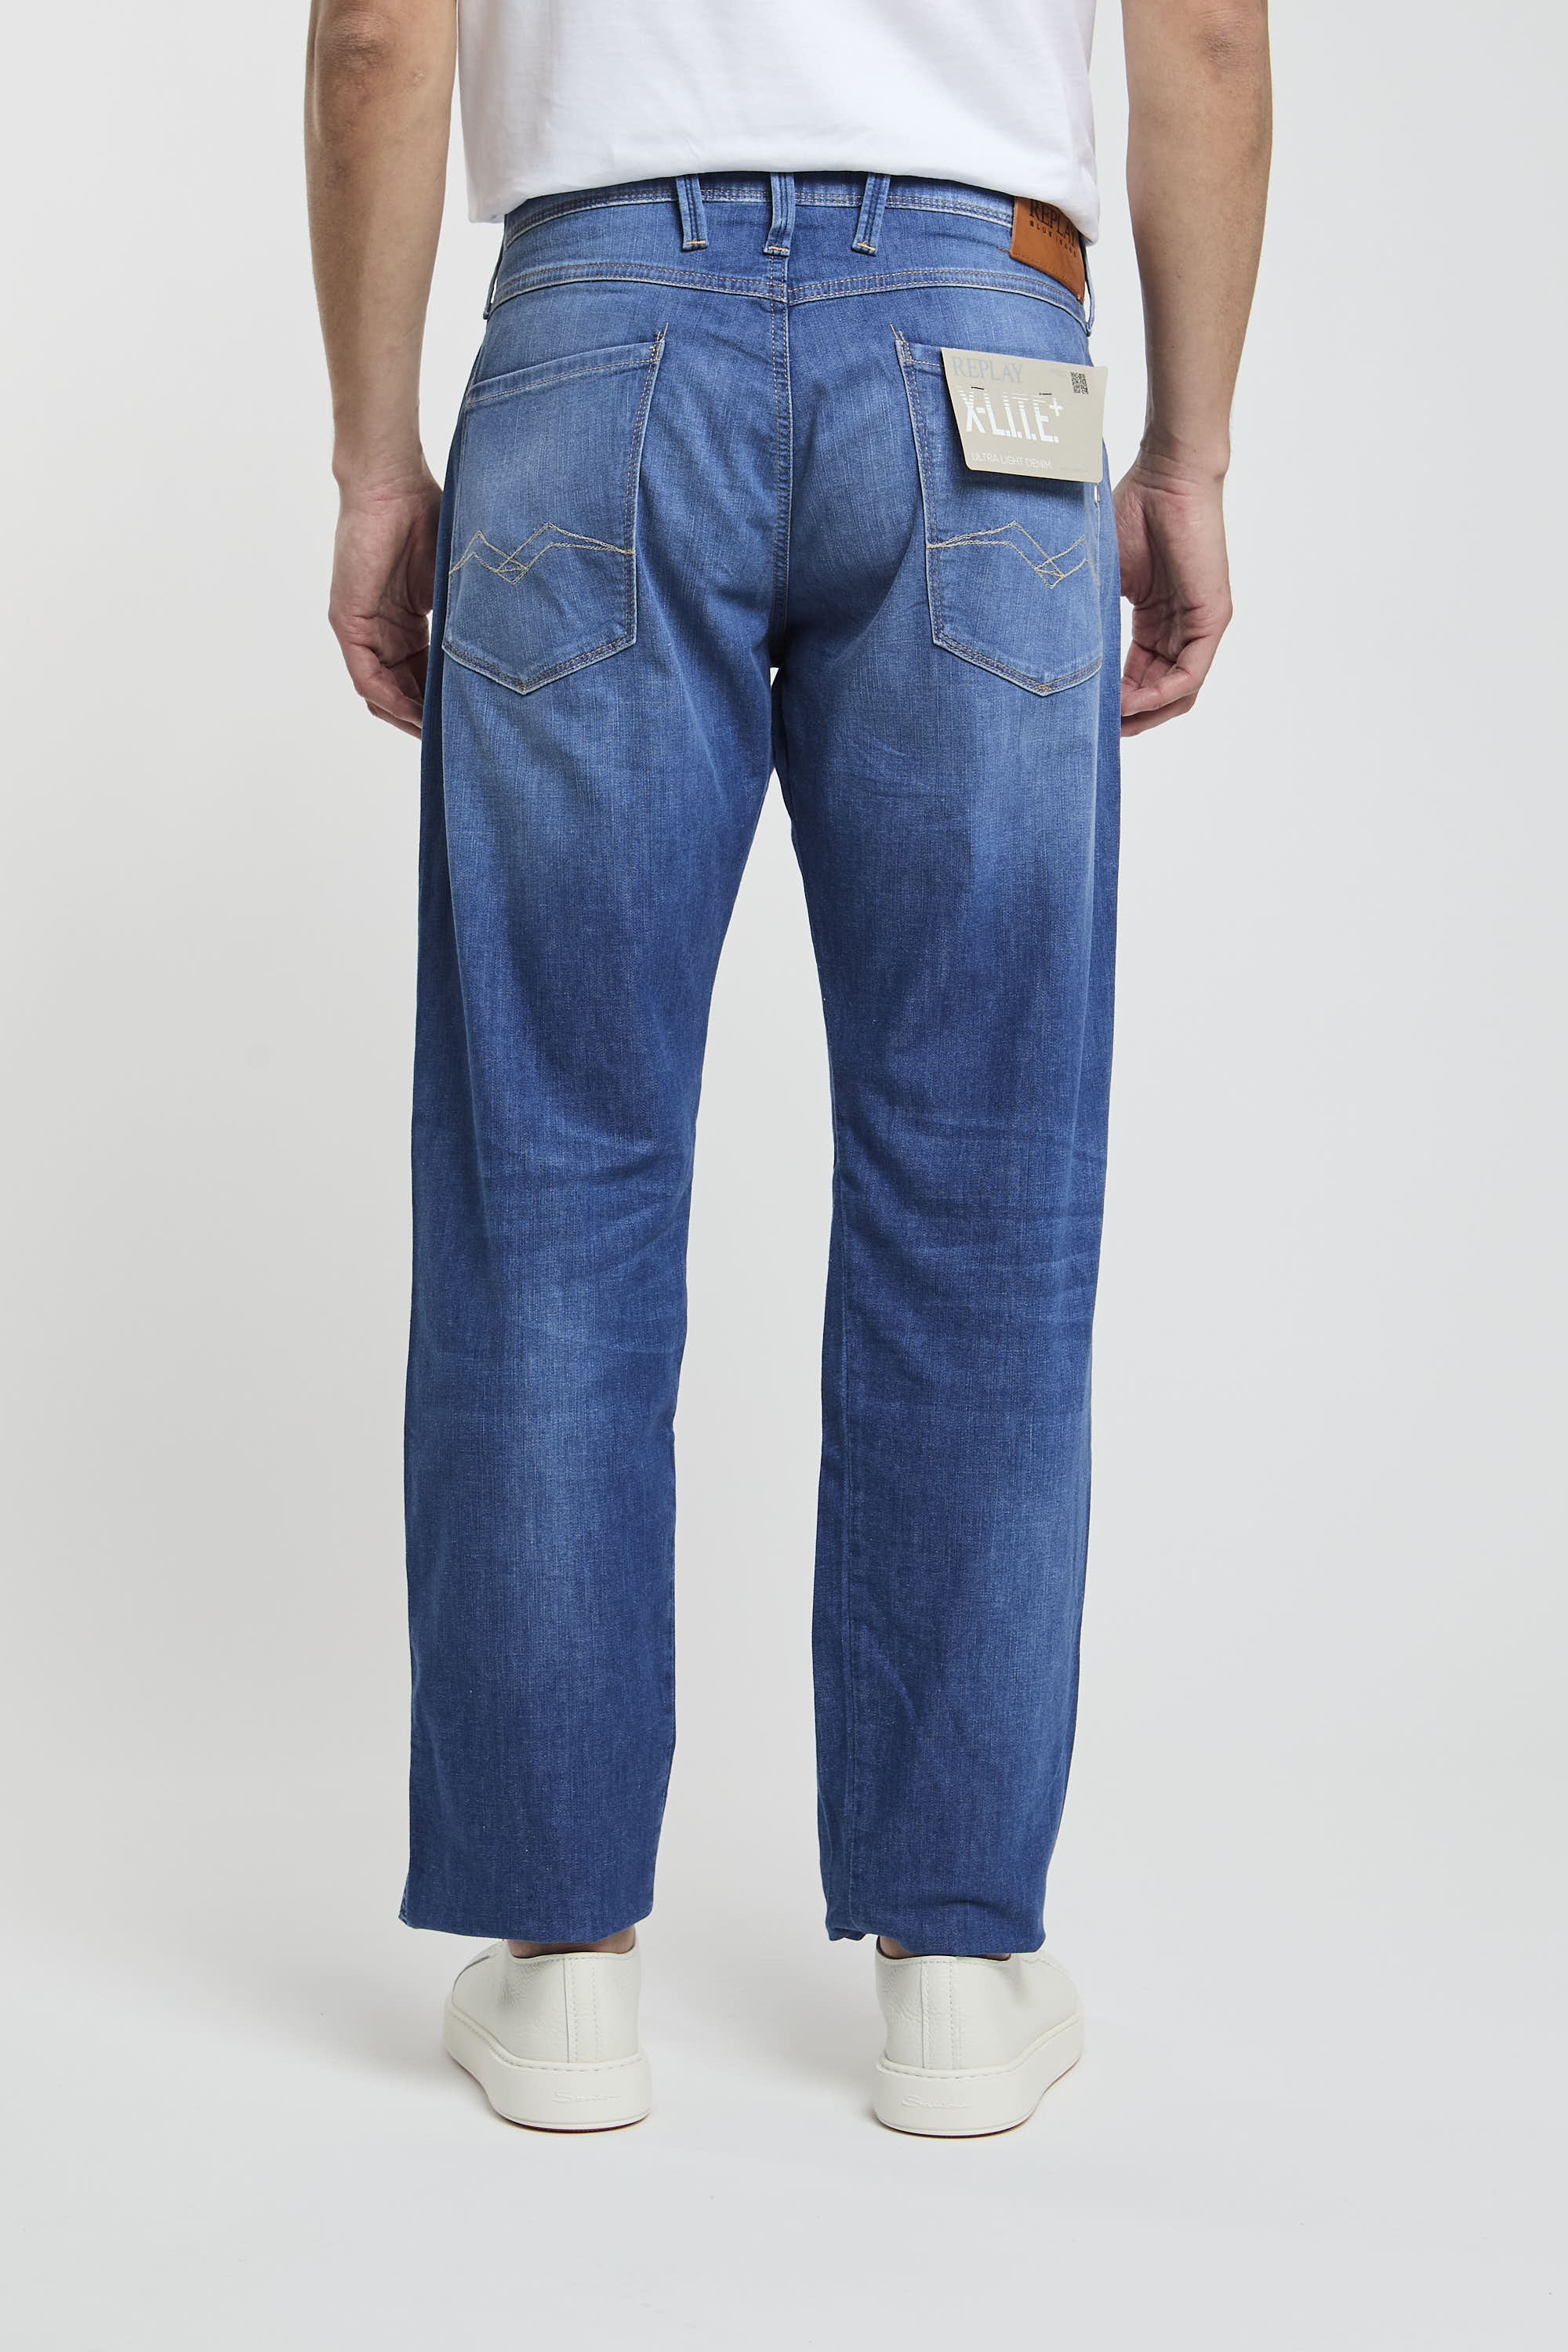 Replay Slim Fit Jeans Denim Made of Cotton/Lyocell/Elastomultiester/Elastane-5